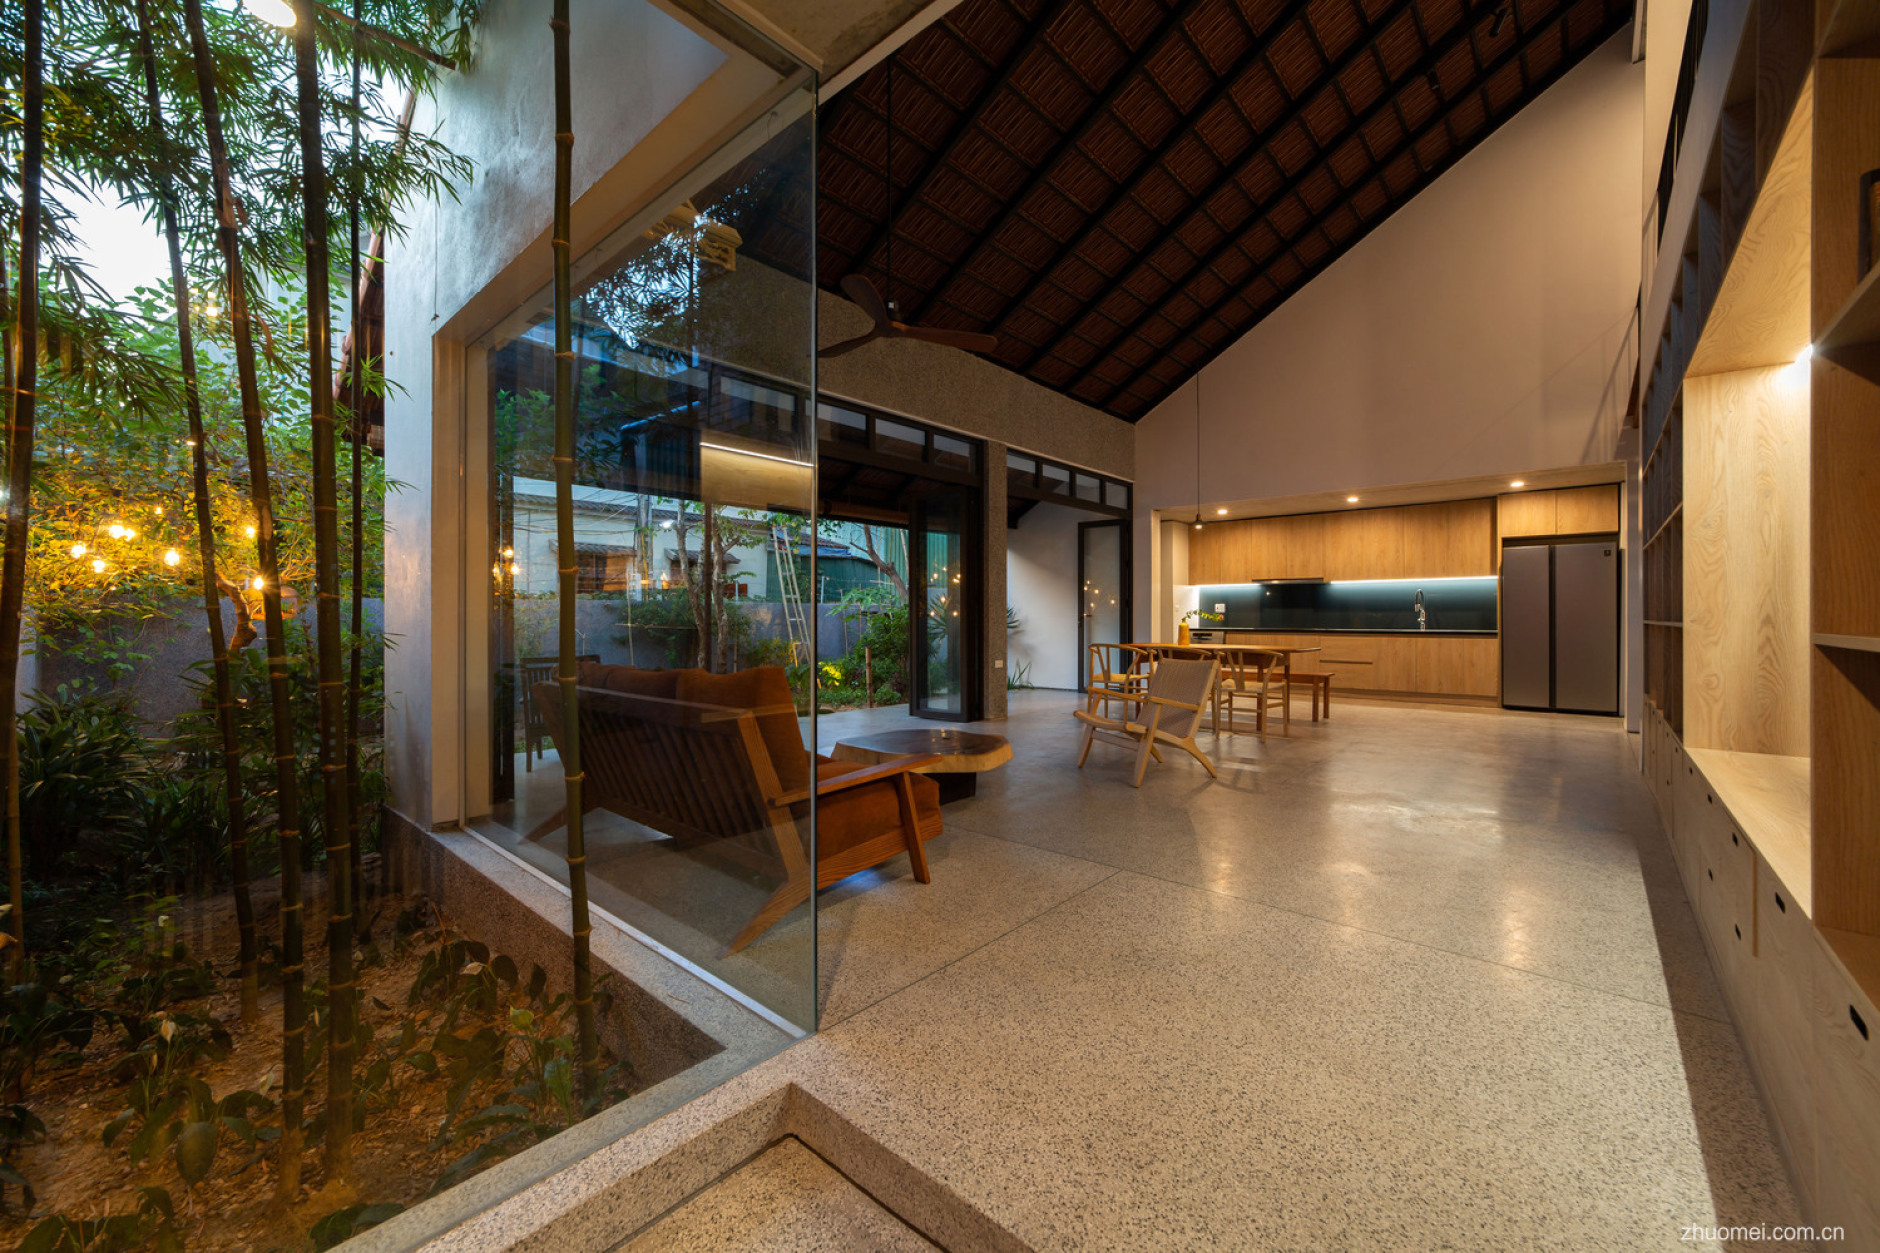 Dom Architect Studio丨The Tiamo House丨越南-56